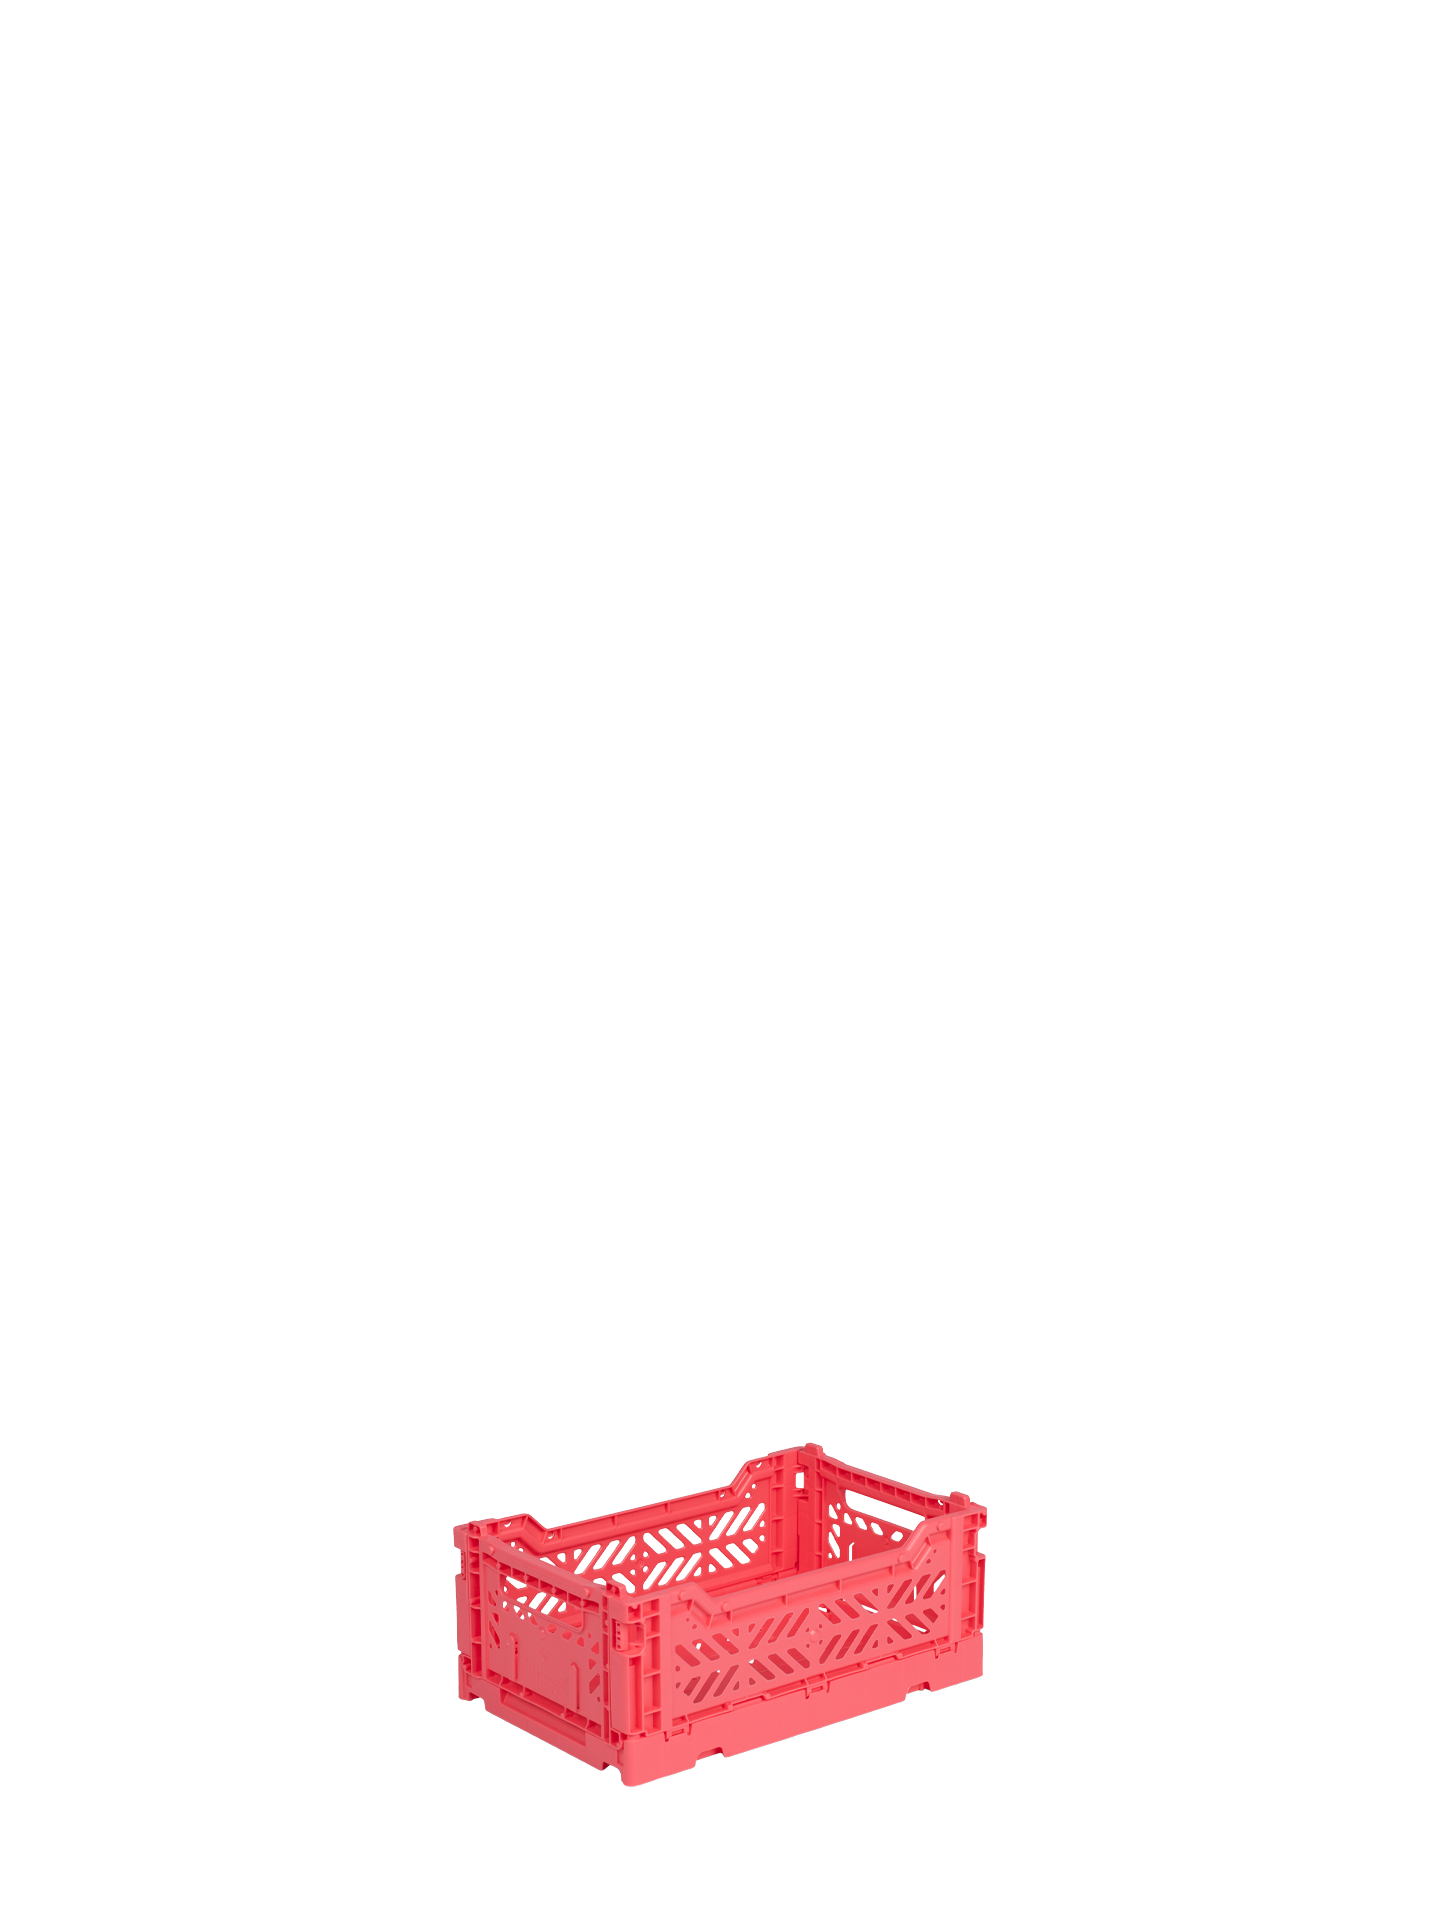 Mini Aykasa crate in dark watermelon pink stacks and folds